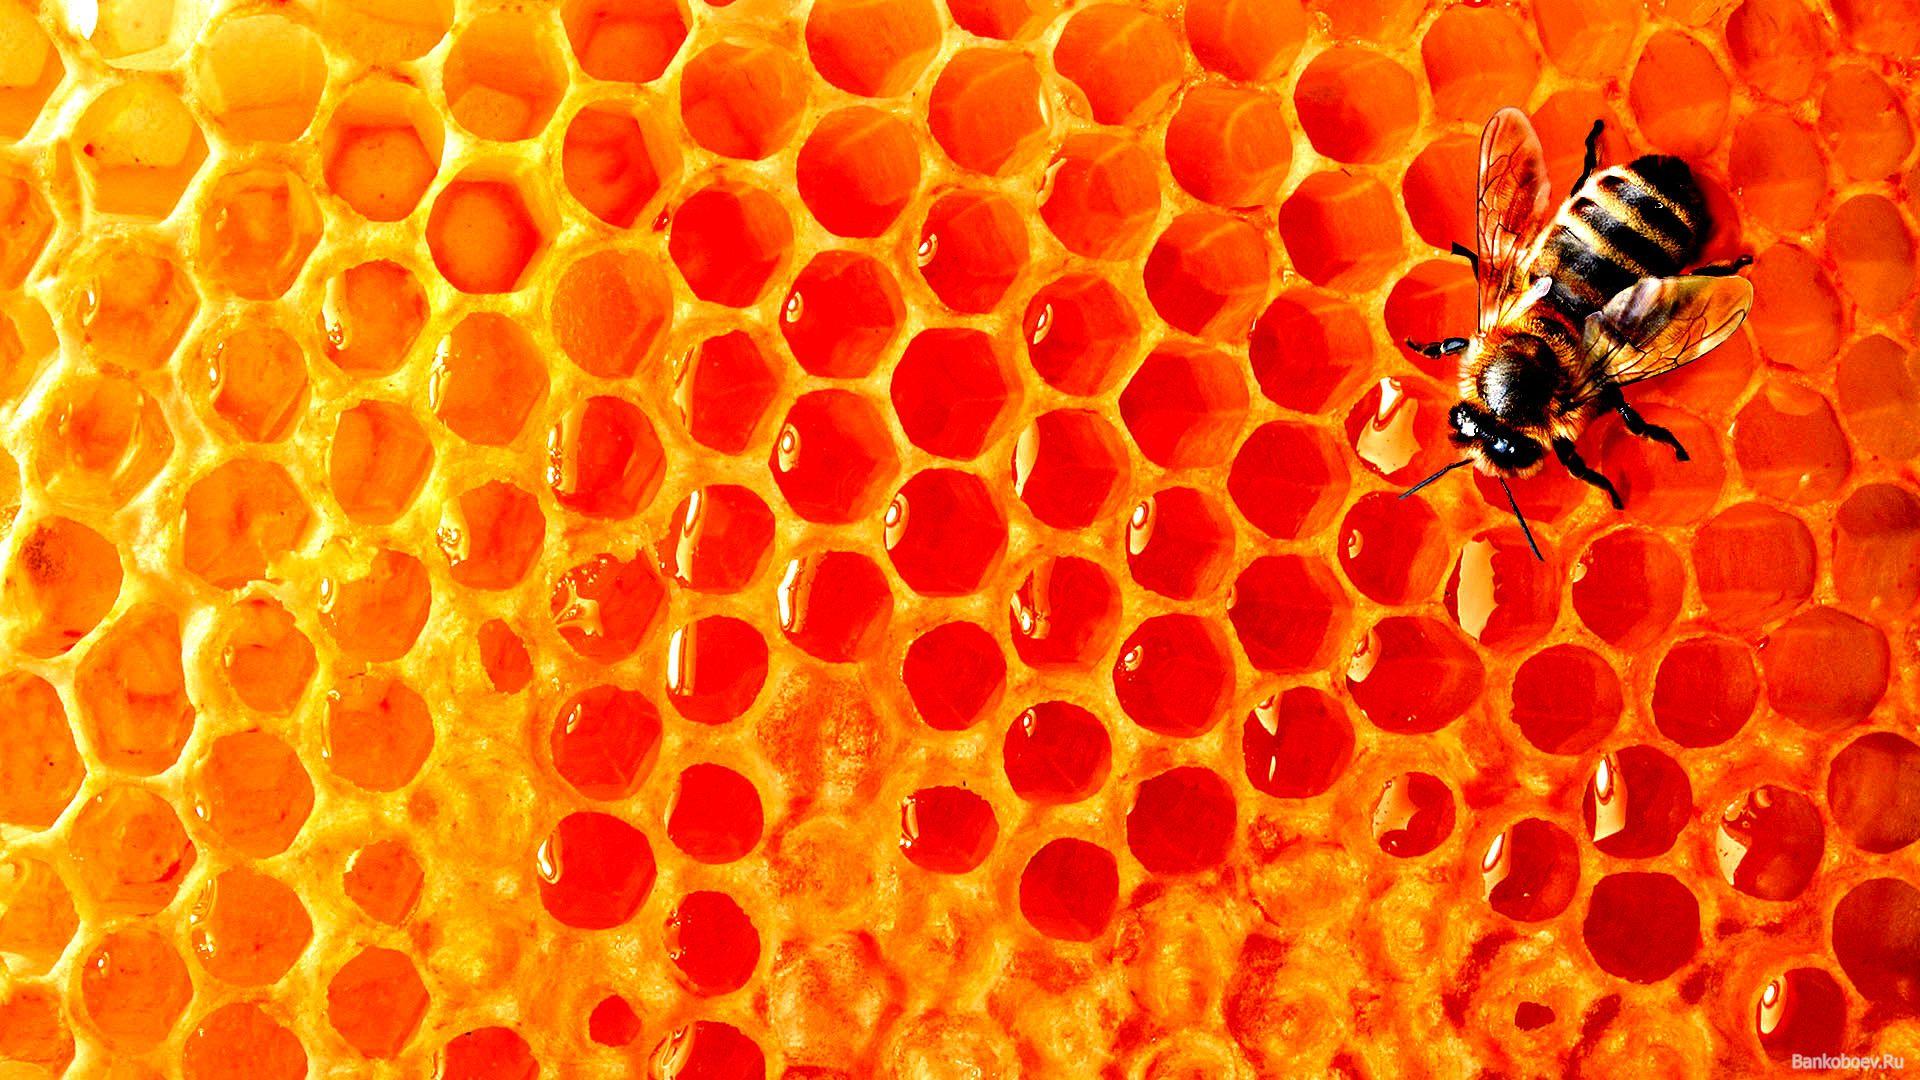 Best Honey Wallpaper in High Quality, Honey Background